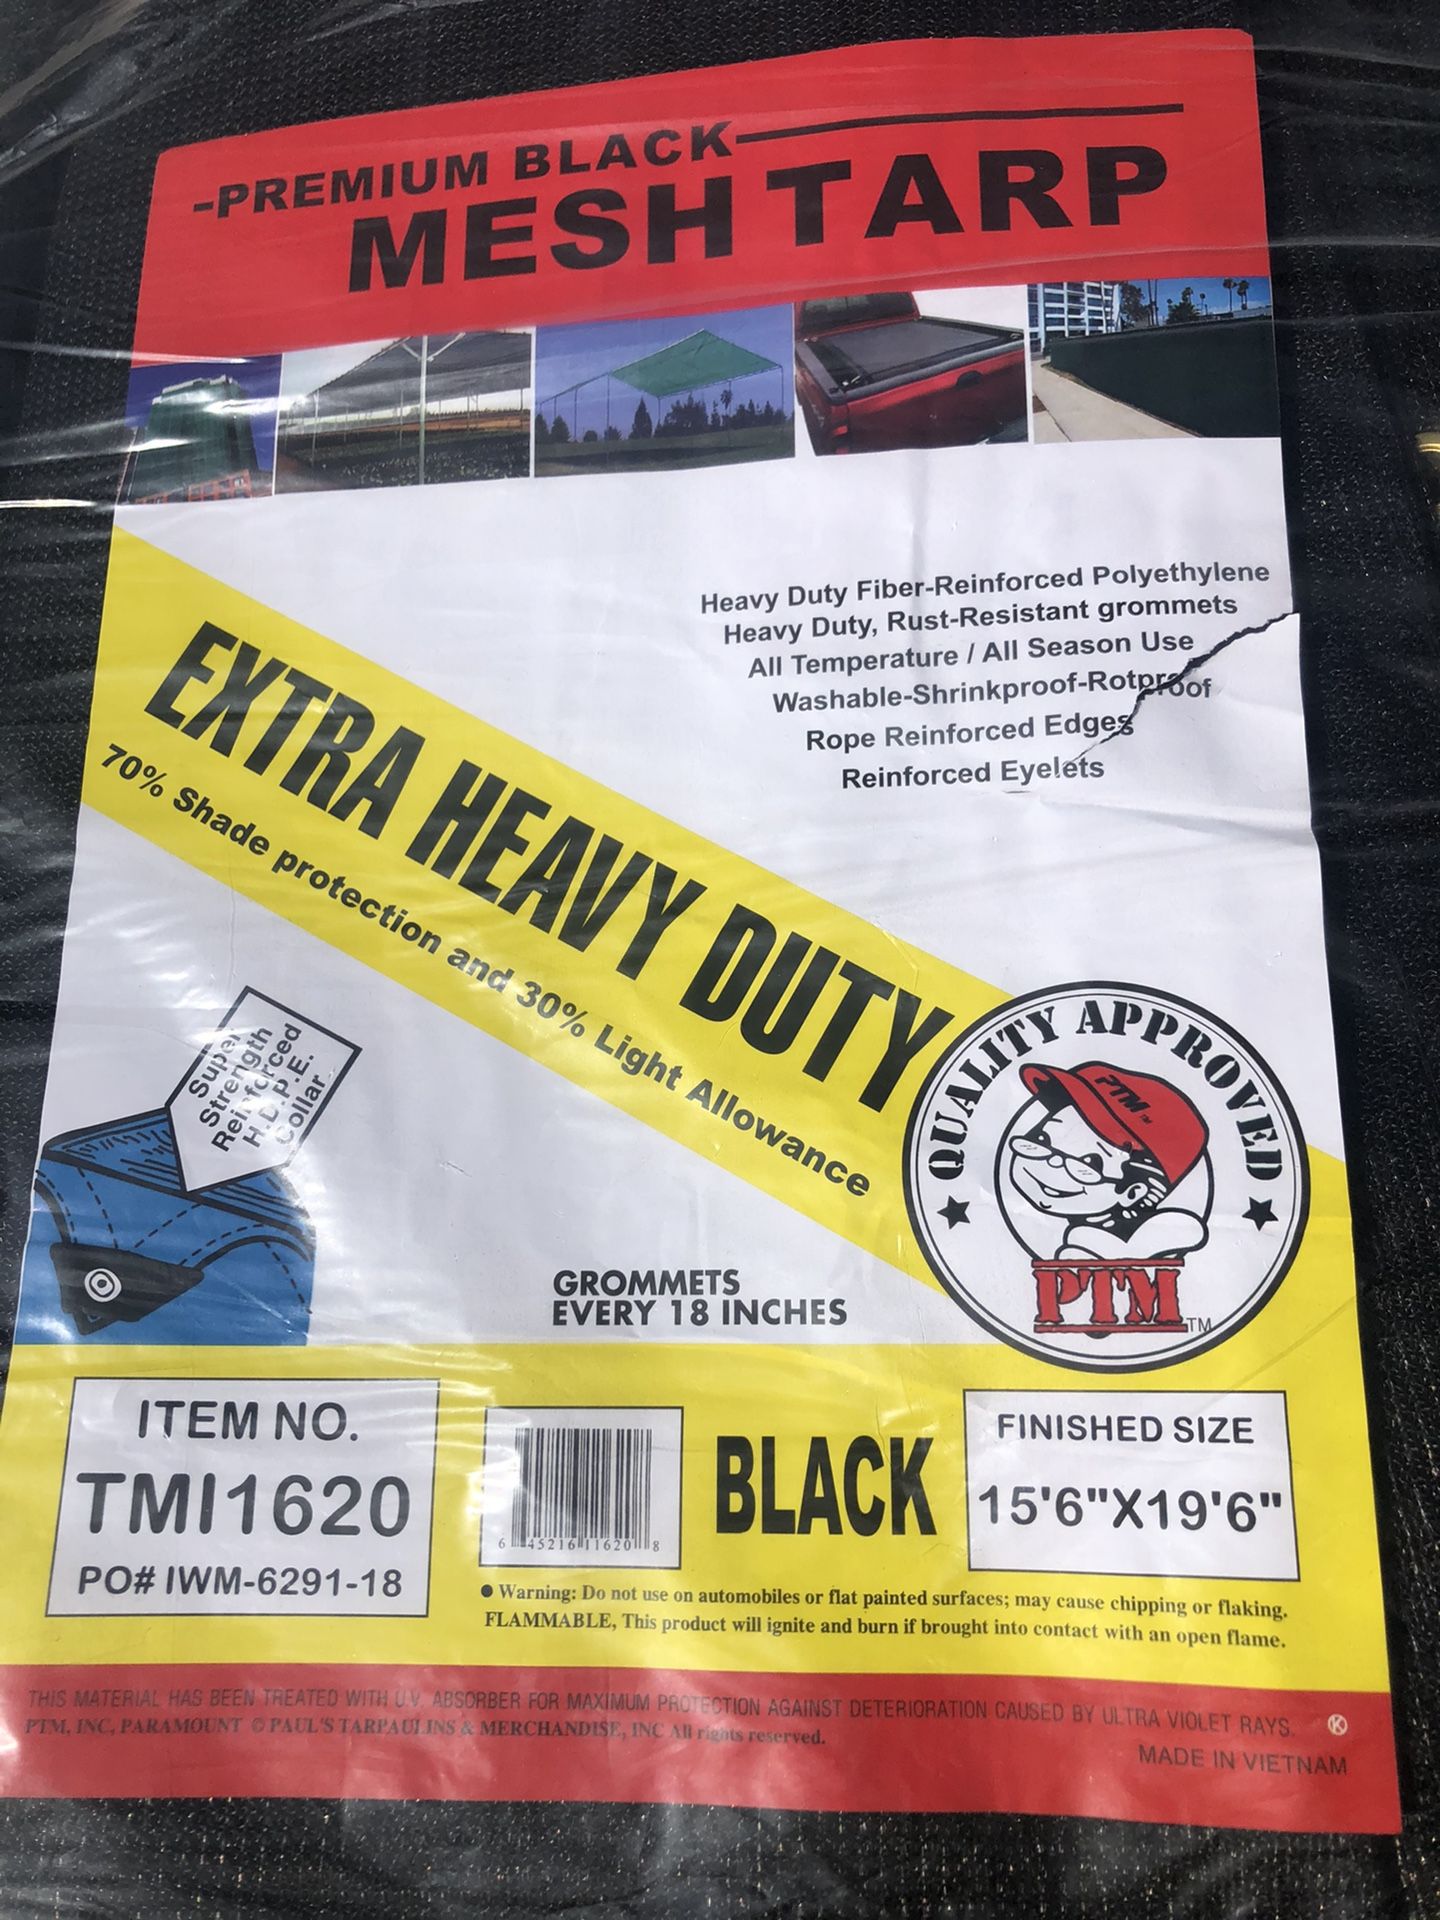 Brand NEW extra heavy BLACK mesh tarp Originally $126